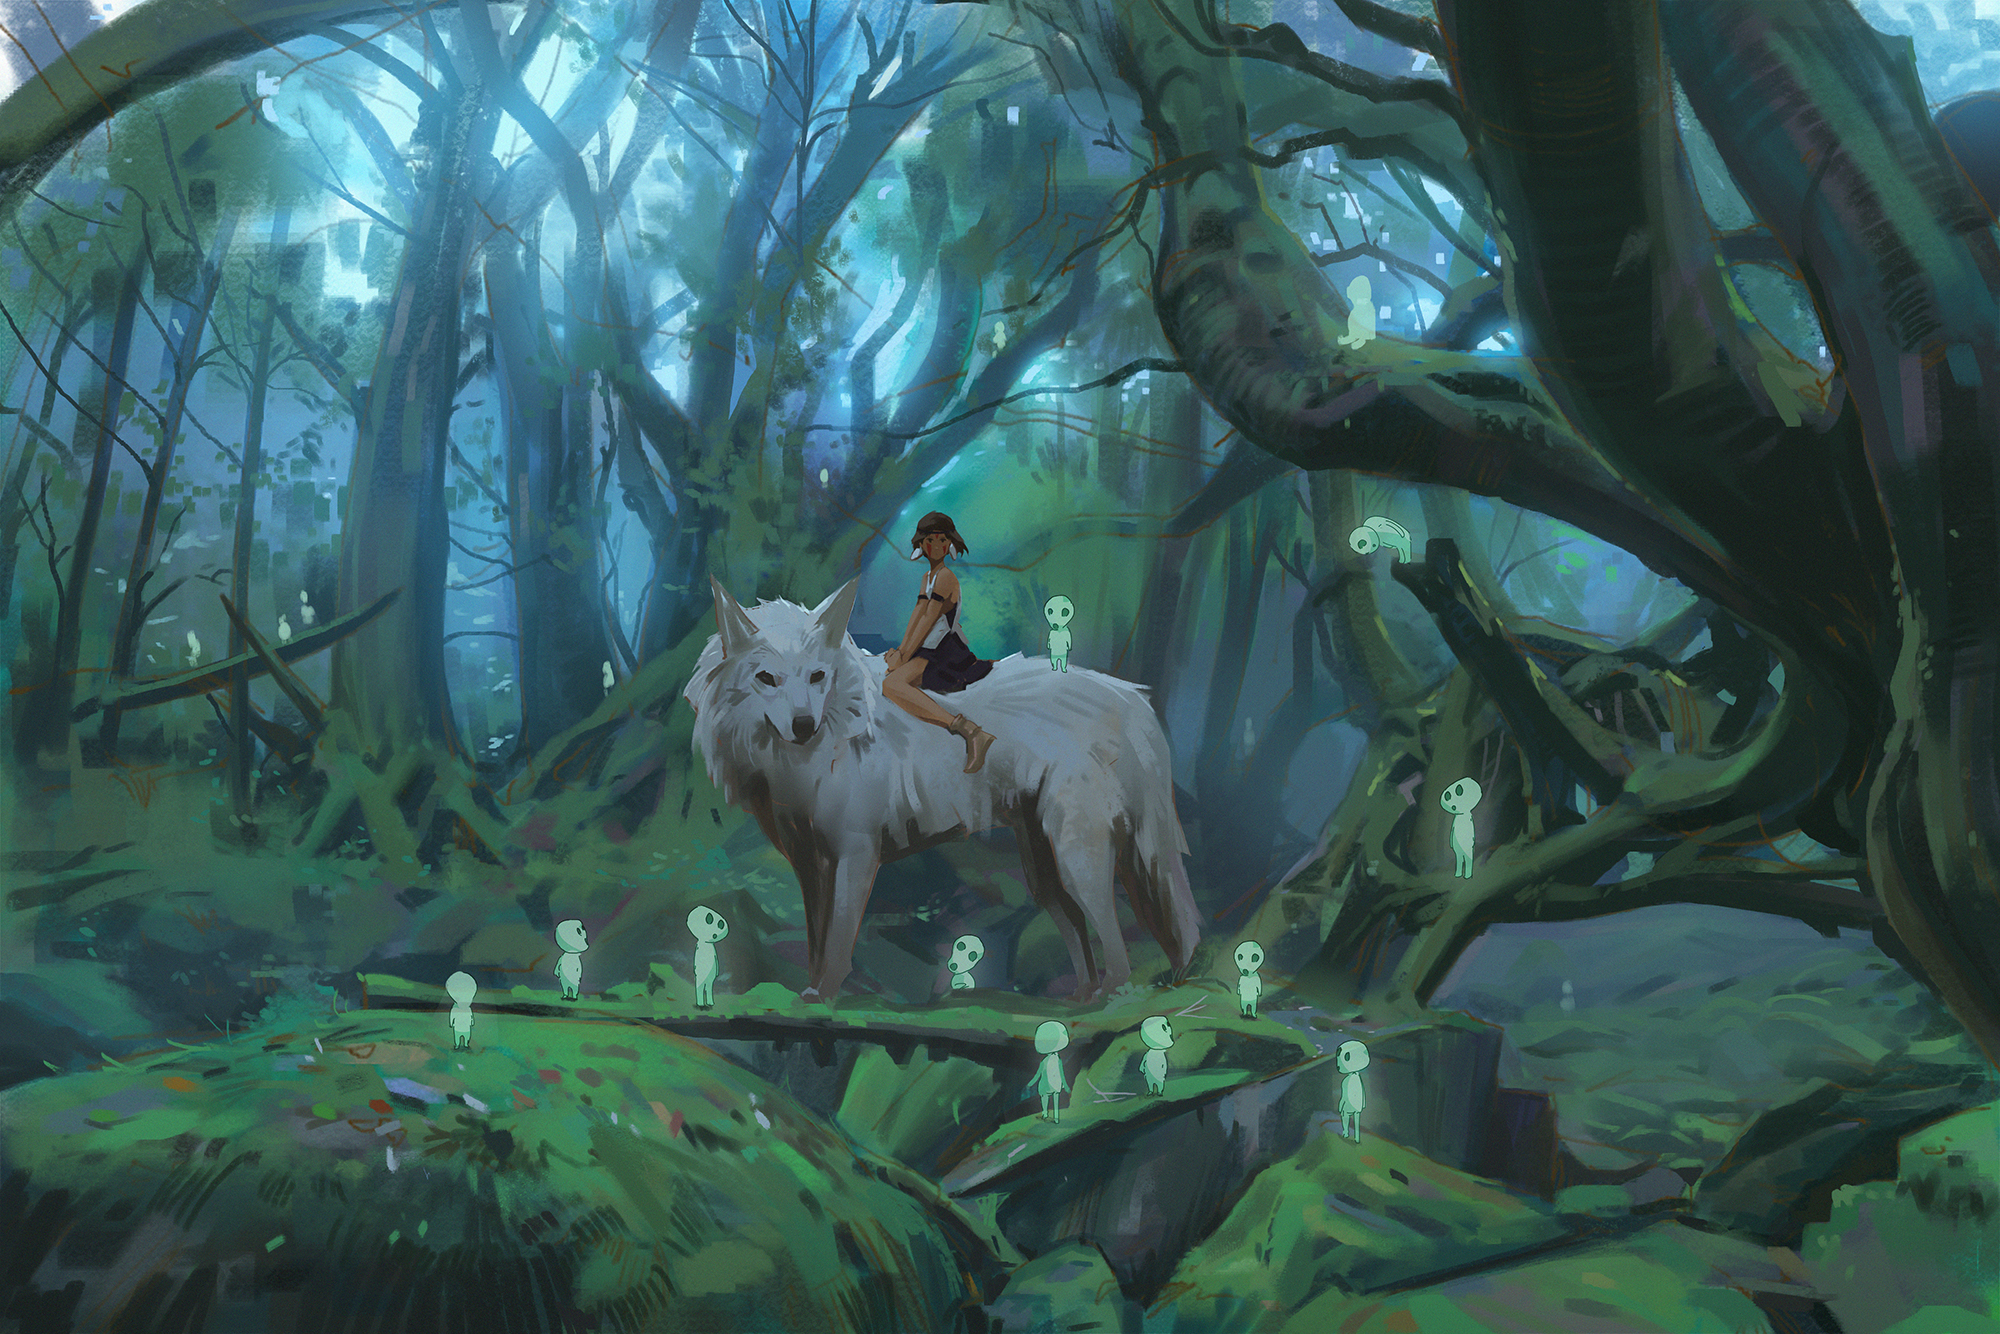 Princess Mononoke Anime Anime Girls Spirits Fantasy Art Fantasy Girl Wolf Forest Trees Environment S 2000x1334